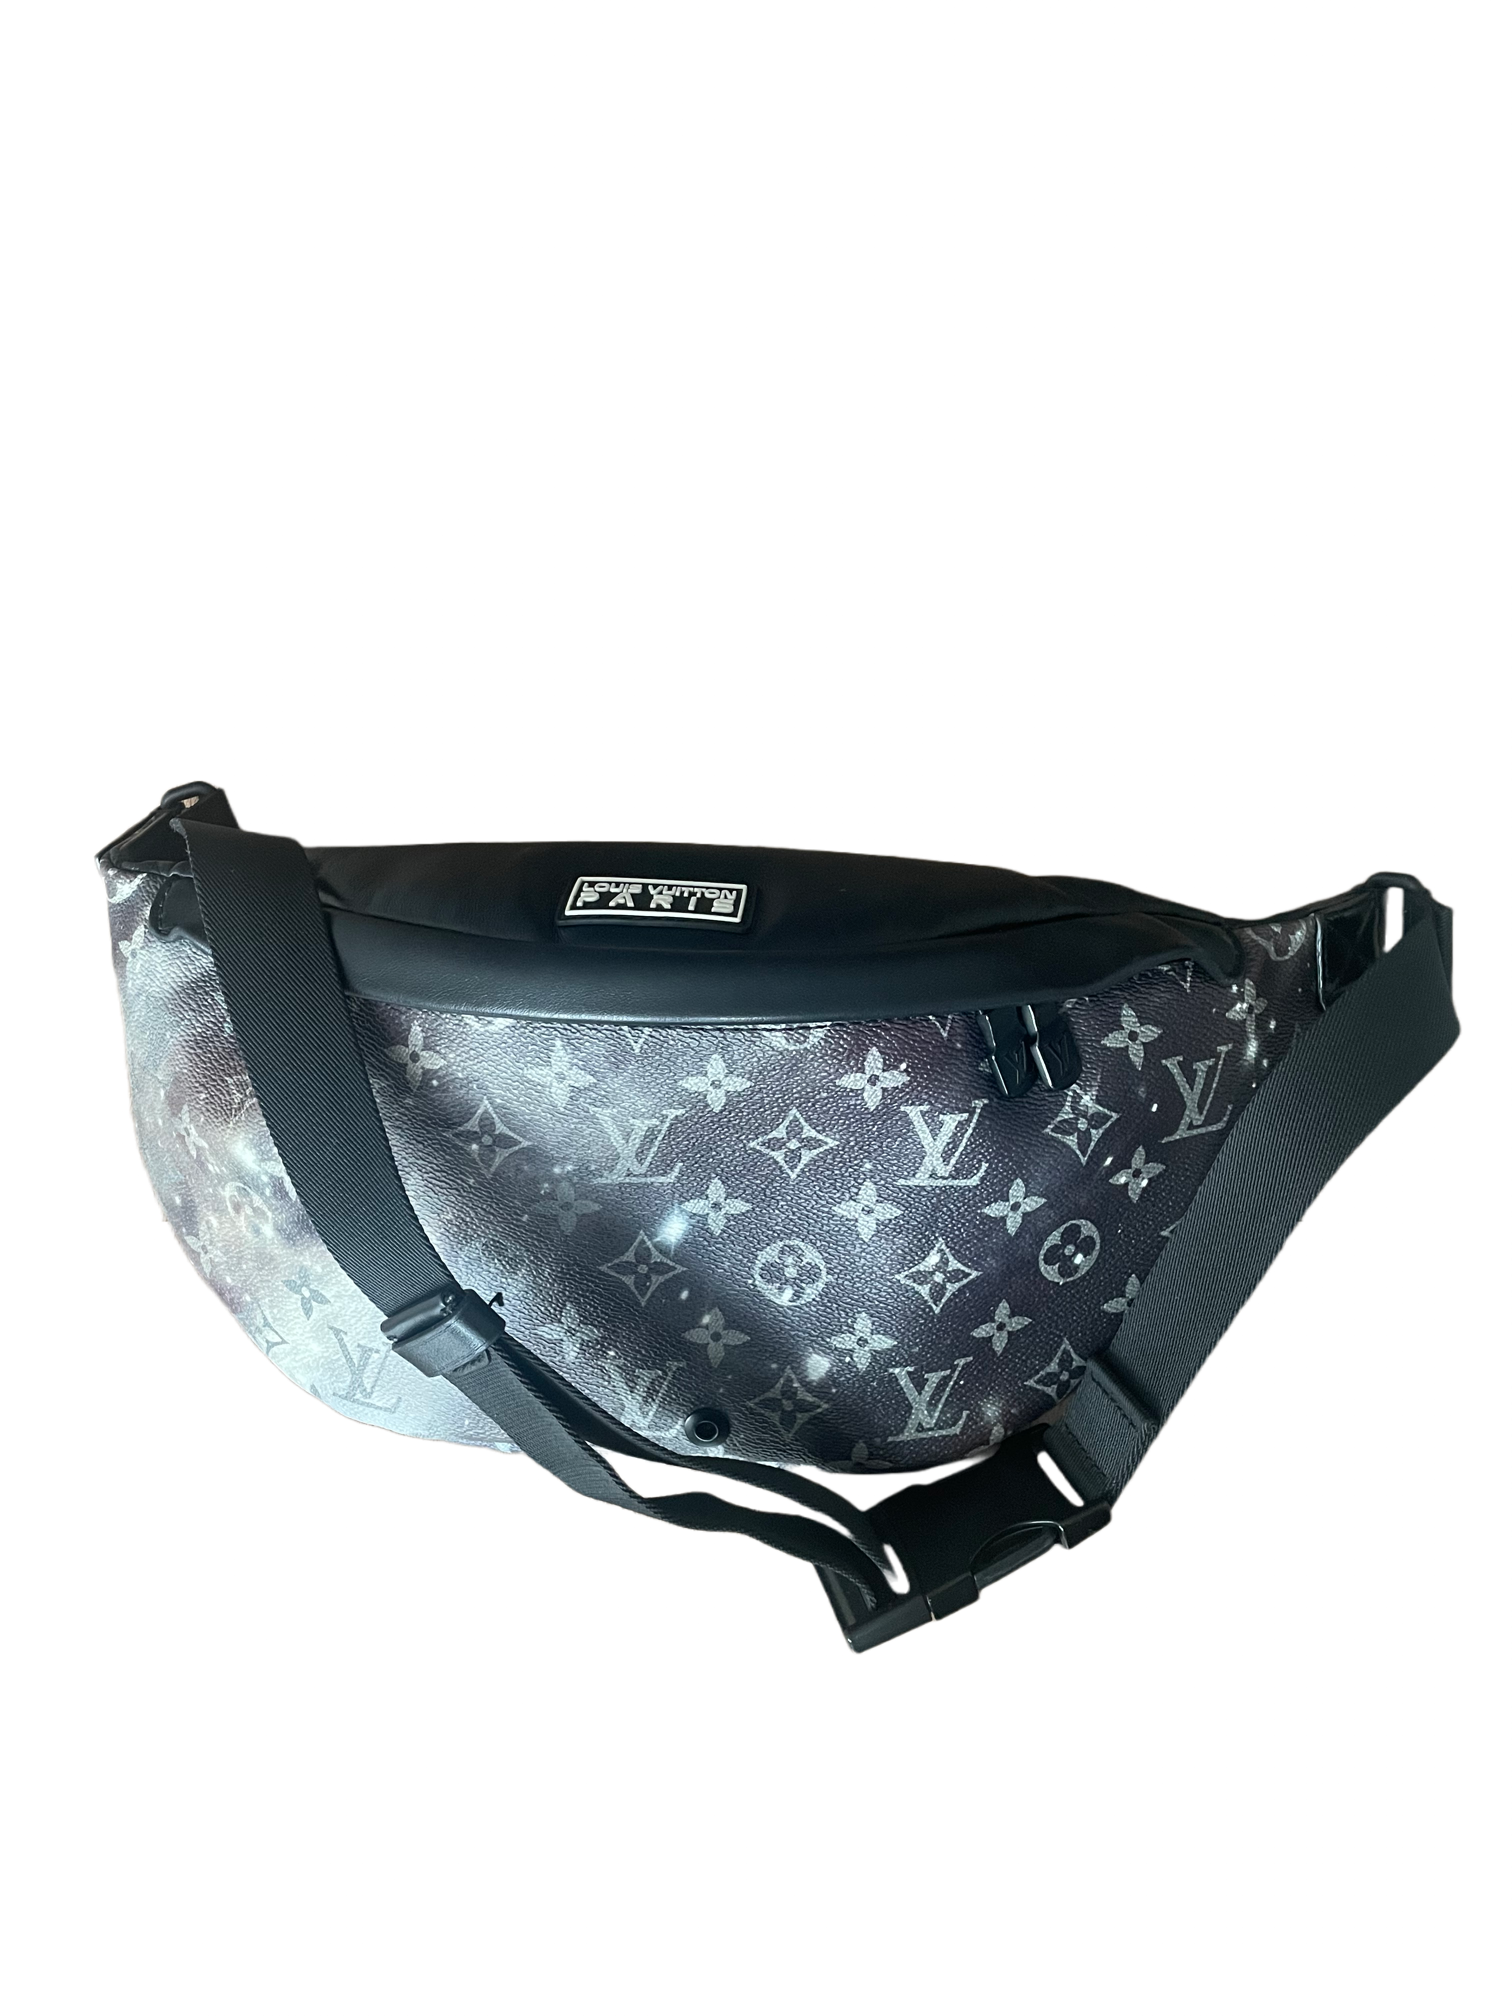 LOUIS VUITTON Monogram Galaxy Bum Bag Shoulder Bag Gray M44444 LV Auth  29569A